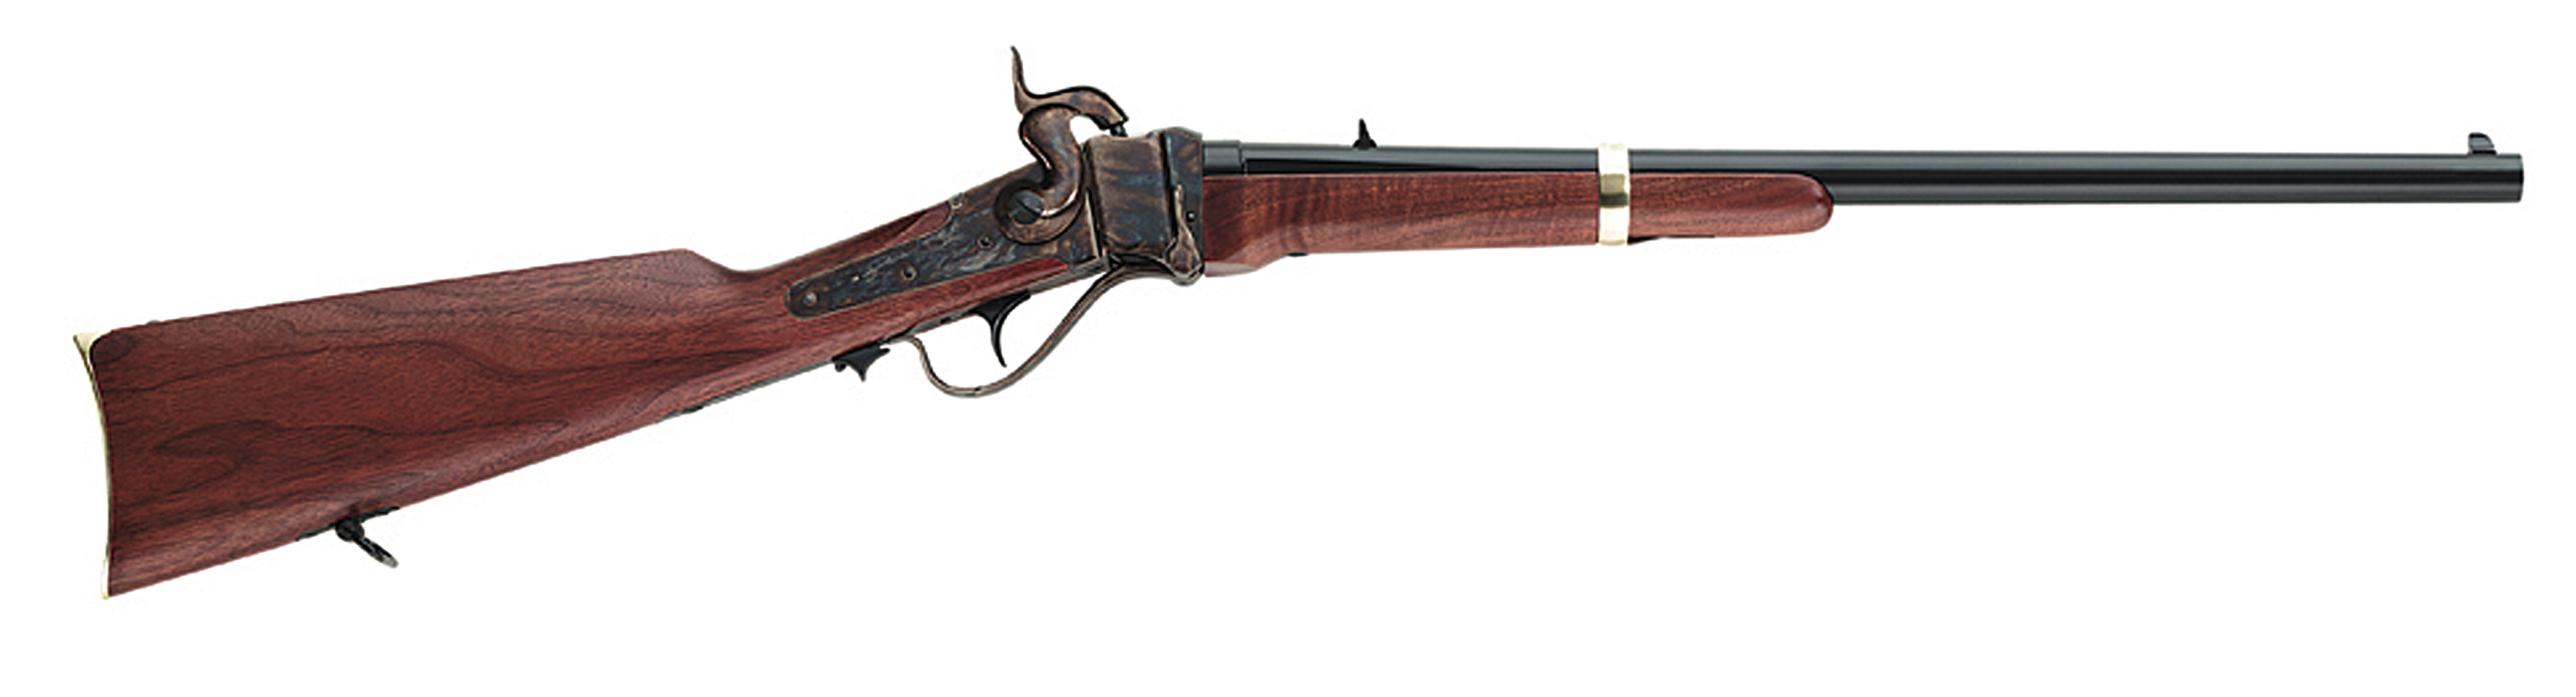 Pedersoli 1859 Sharps 1862 Confederate Carbine Standard